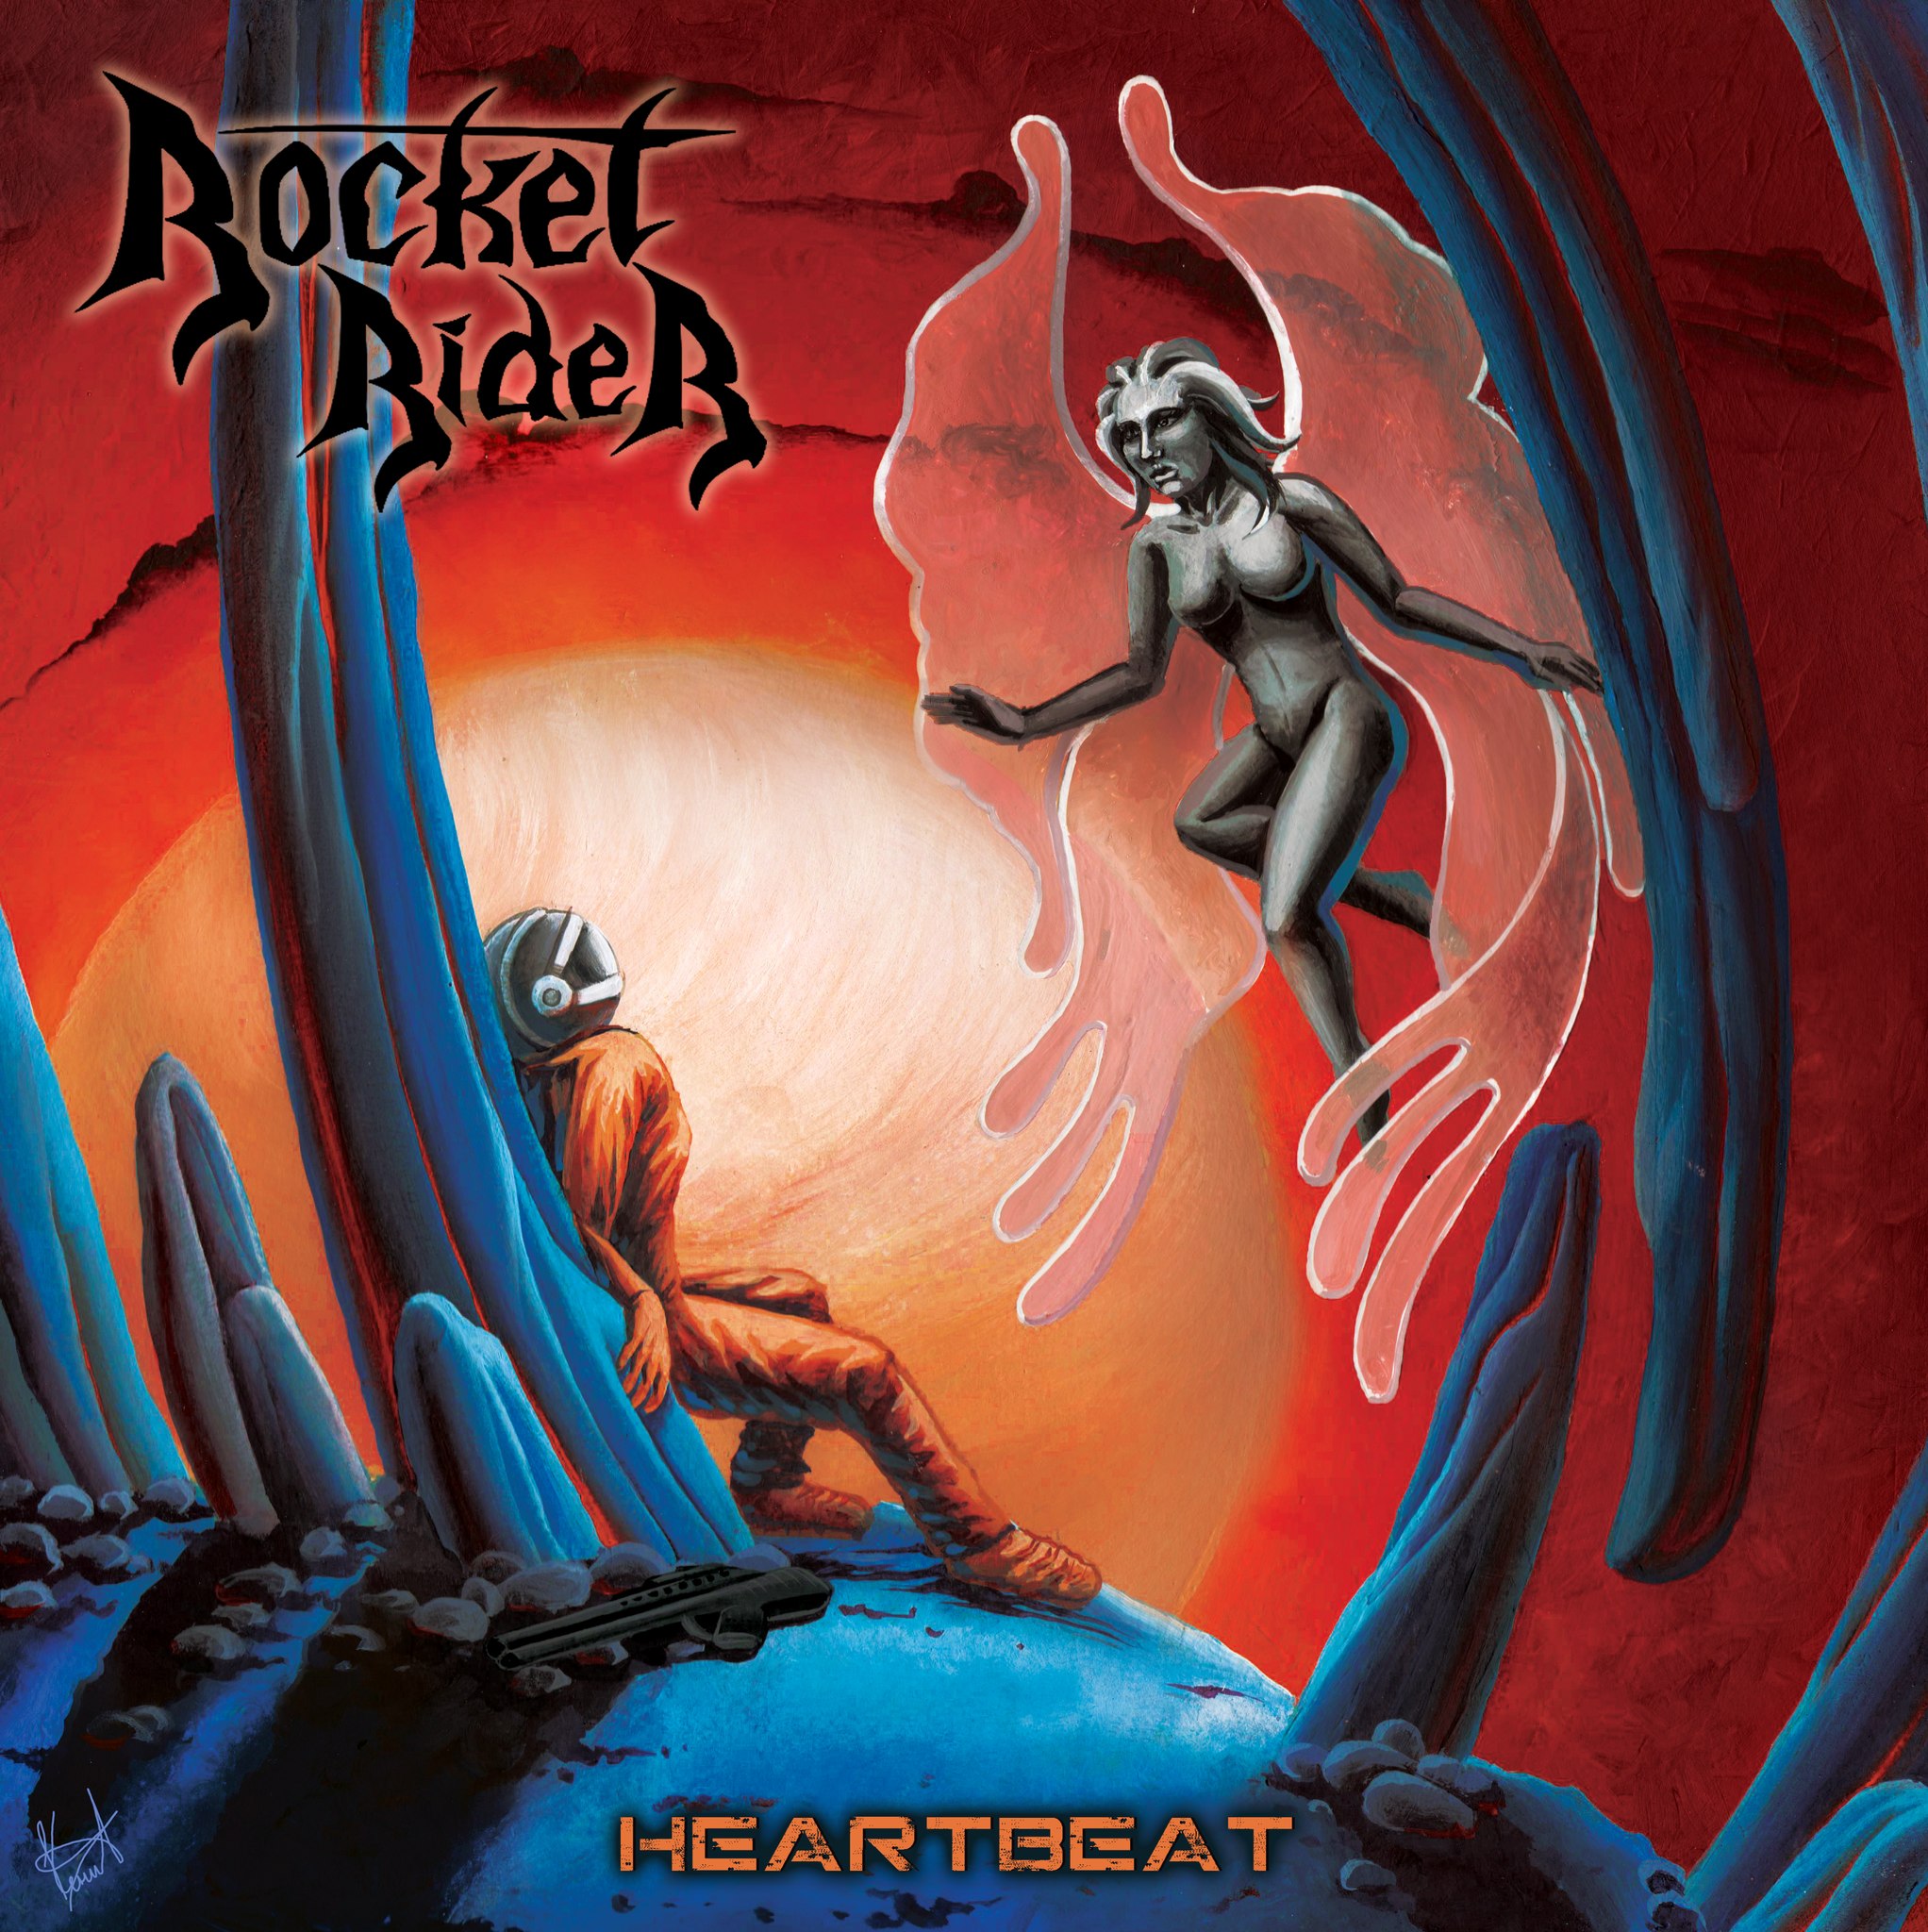 Rocket Rider - Heartbeat